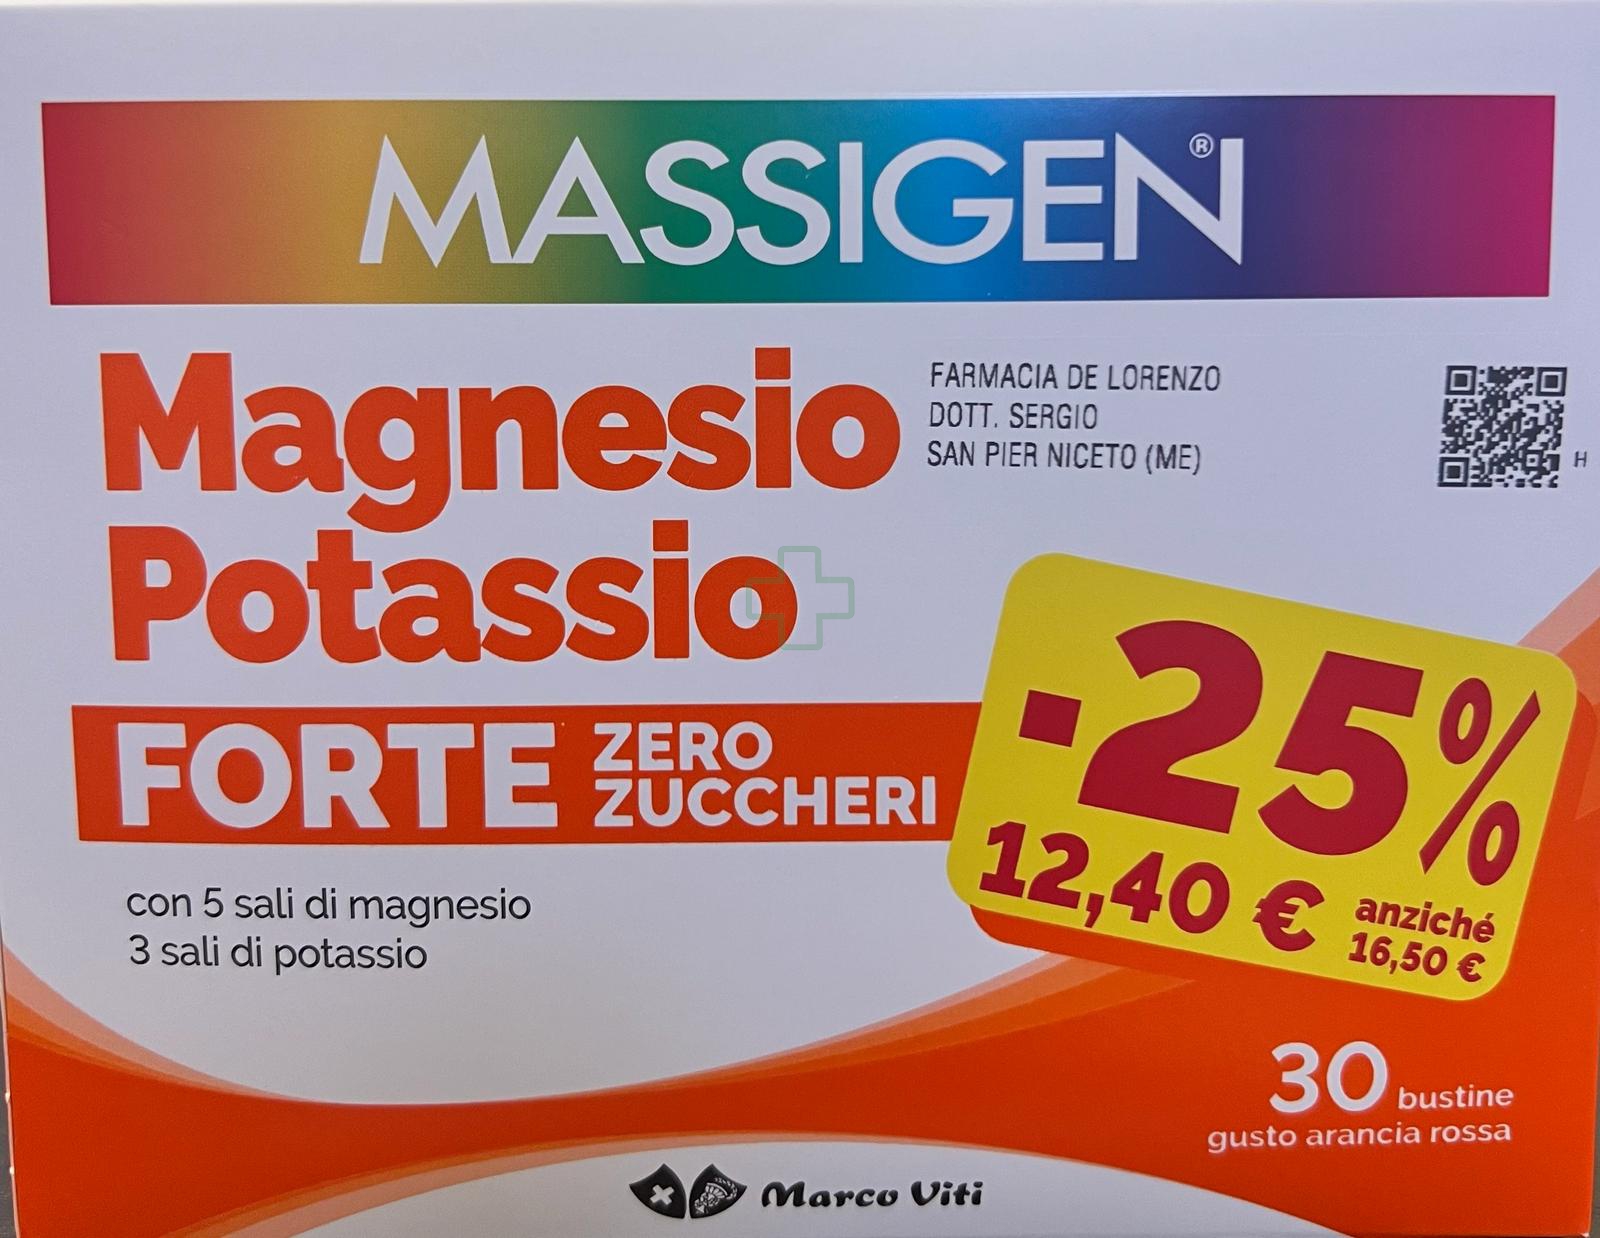 Massigen Magnesio K Ft Promo